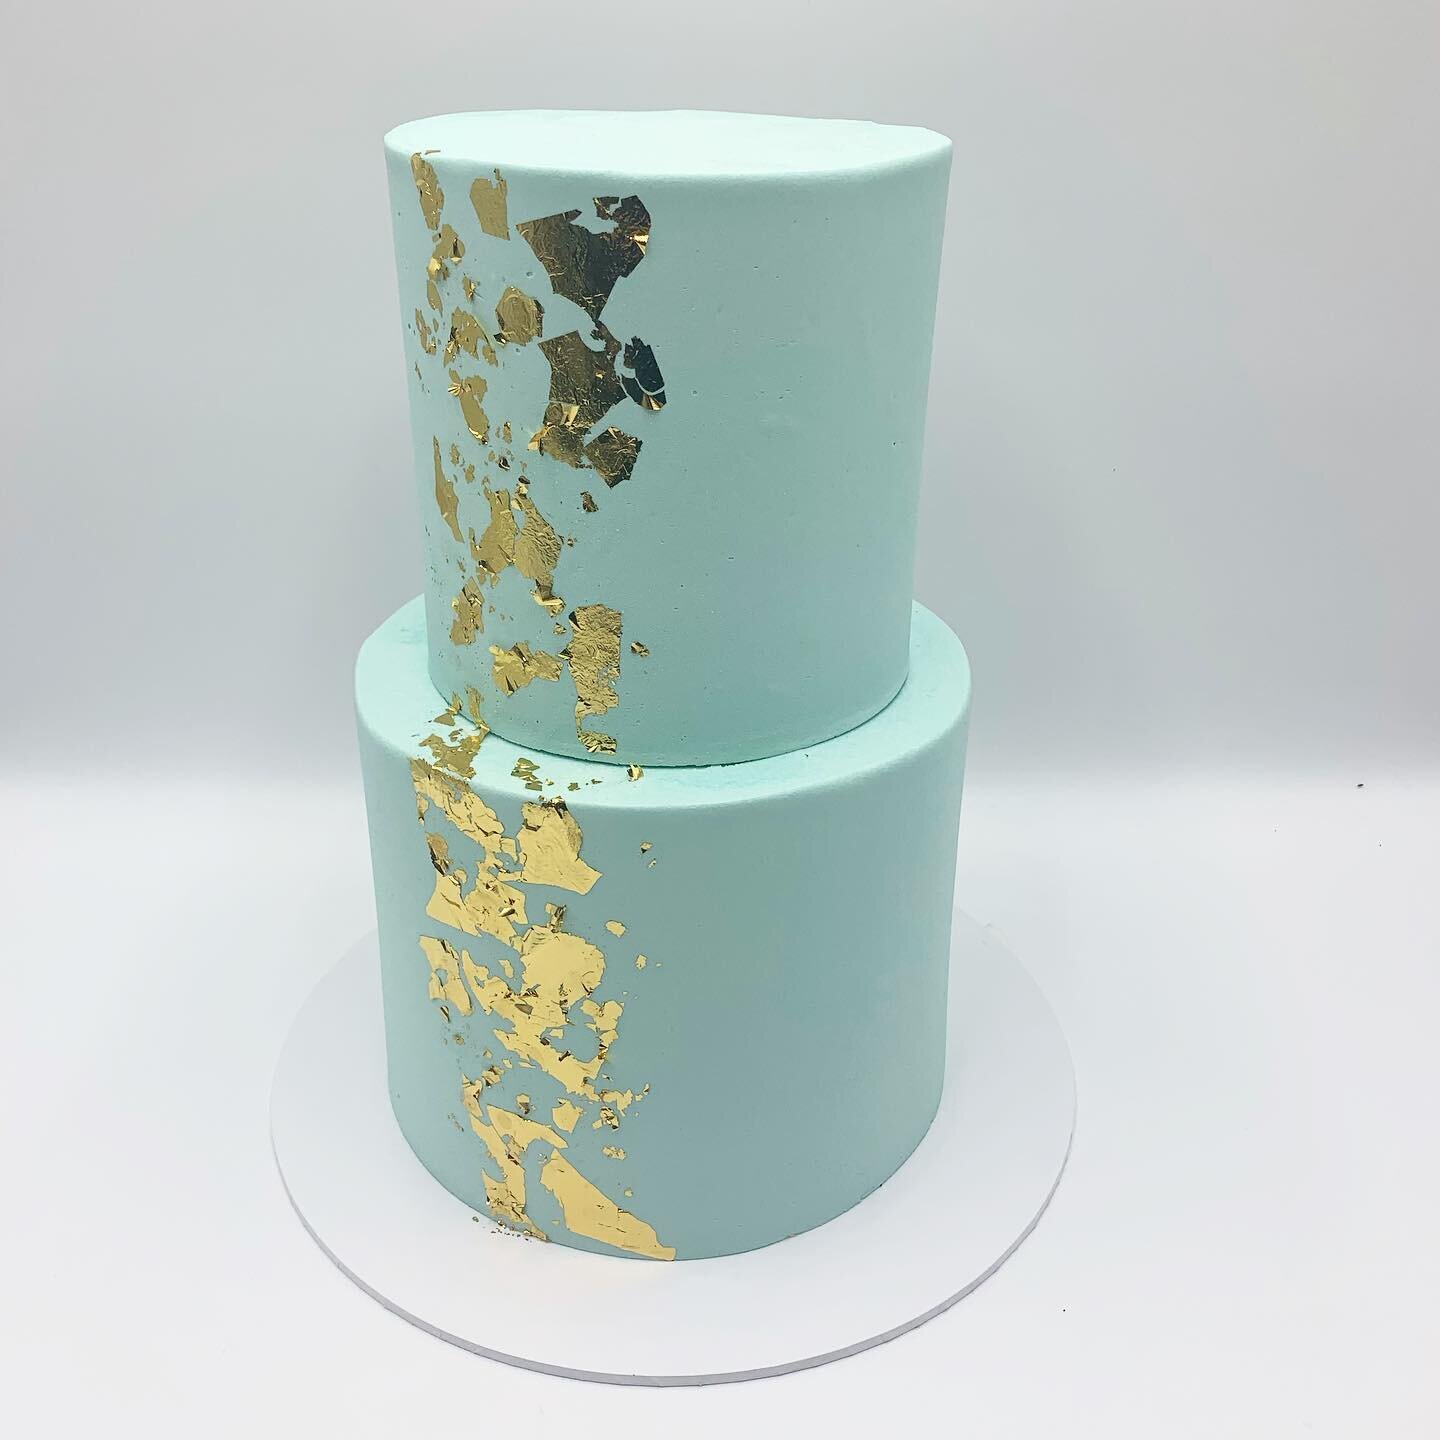 Swipe to see this gorgeous cake on display @bindisballoons 🤍🤍